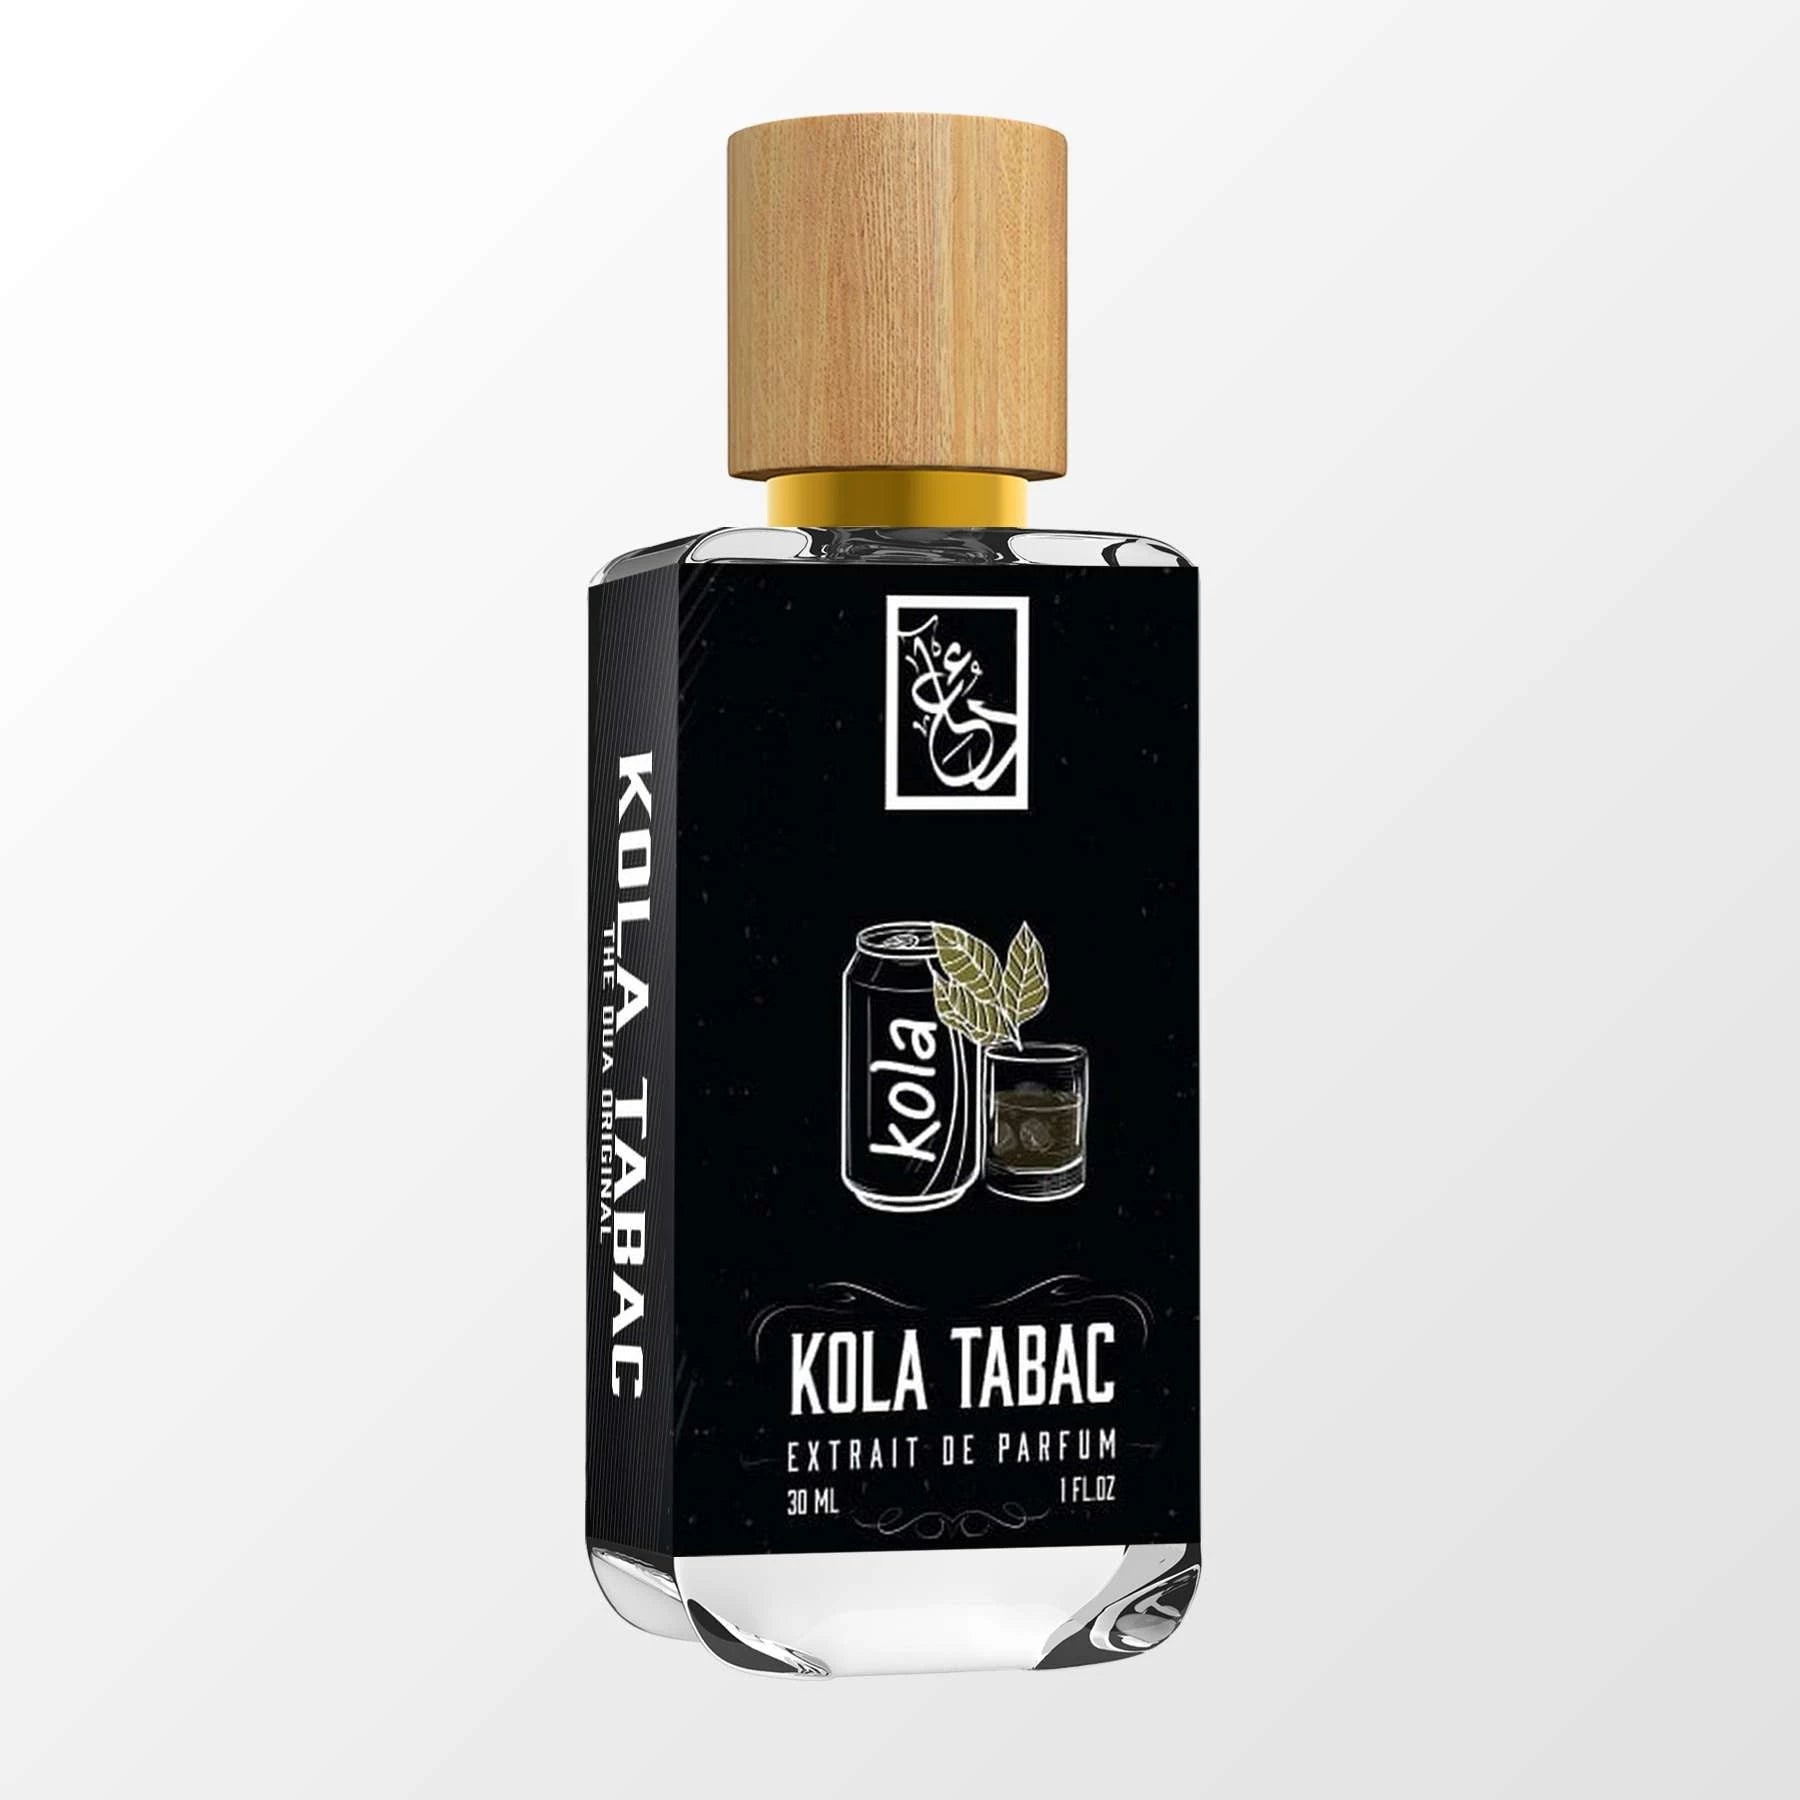 Kola Tabac - DUA FRAGRANCES - Amber Spicy - Unisex Perfume - 34ml/1.1 FL OZ  - Extrait De Parfum